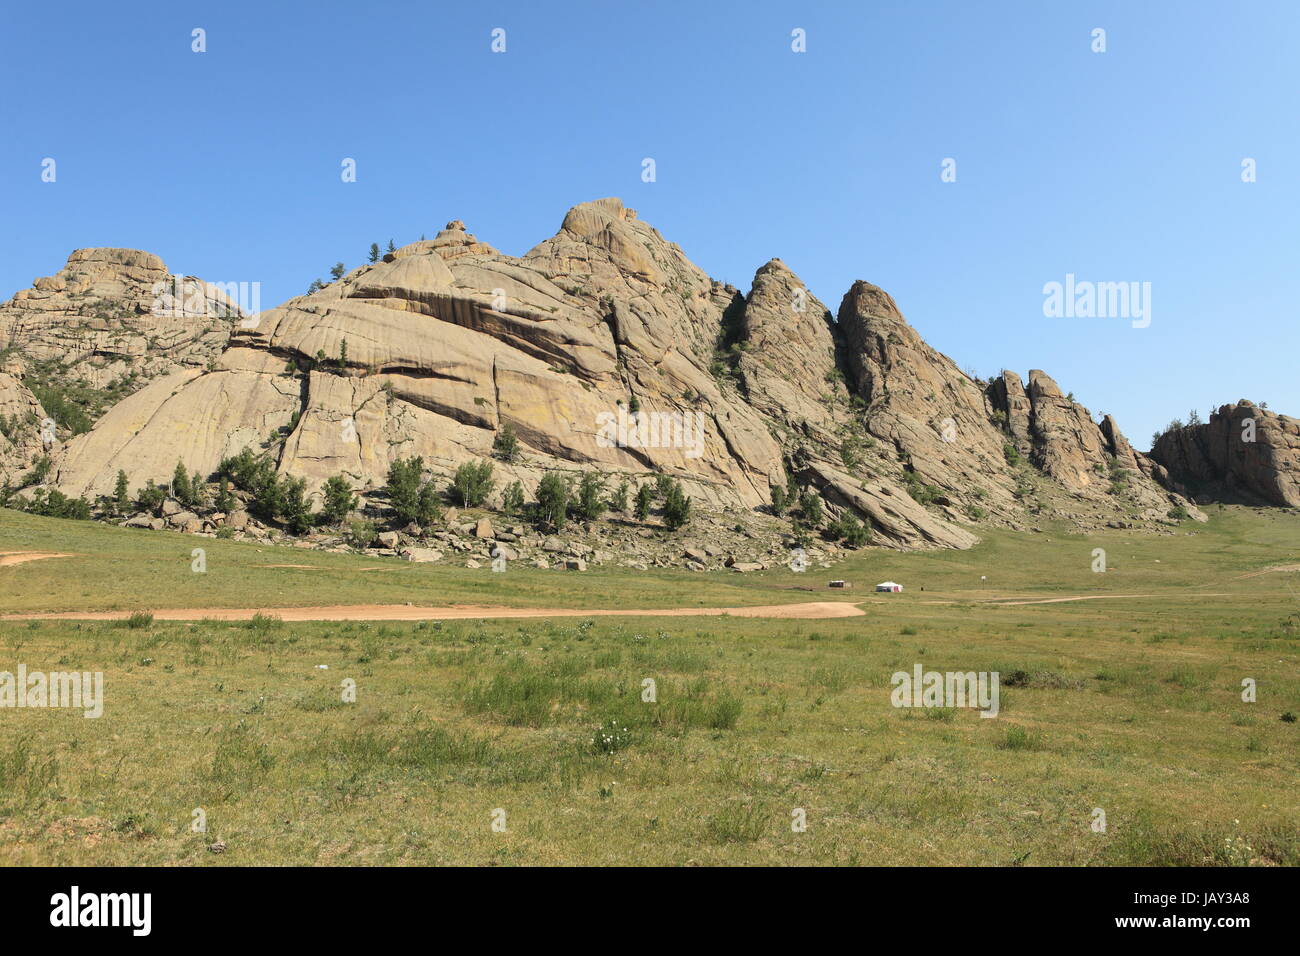 gorkhi terelj national park in mongolia Stock Photo